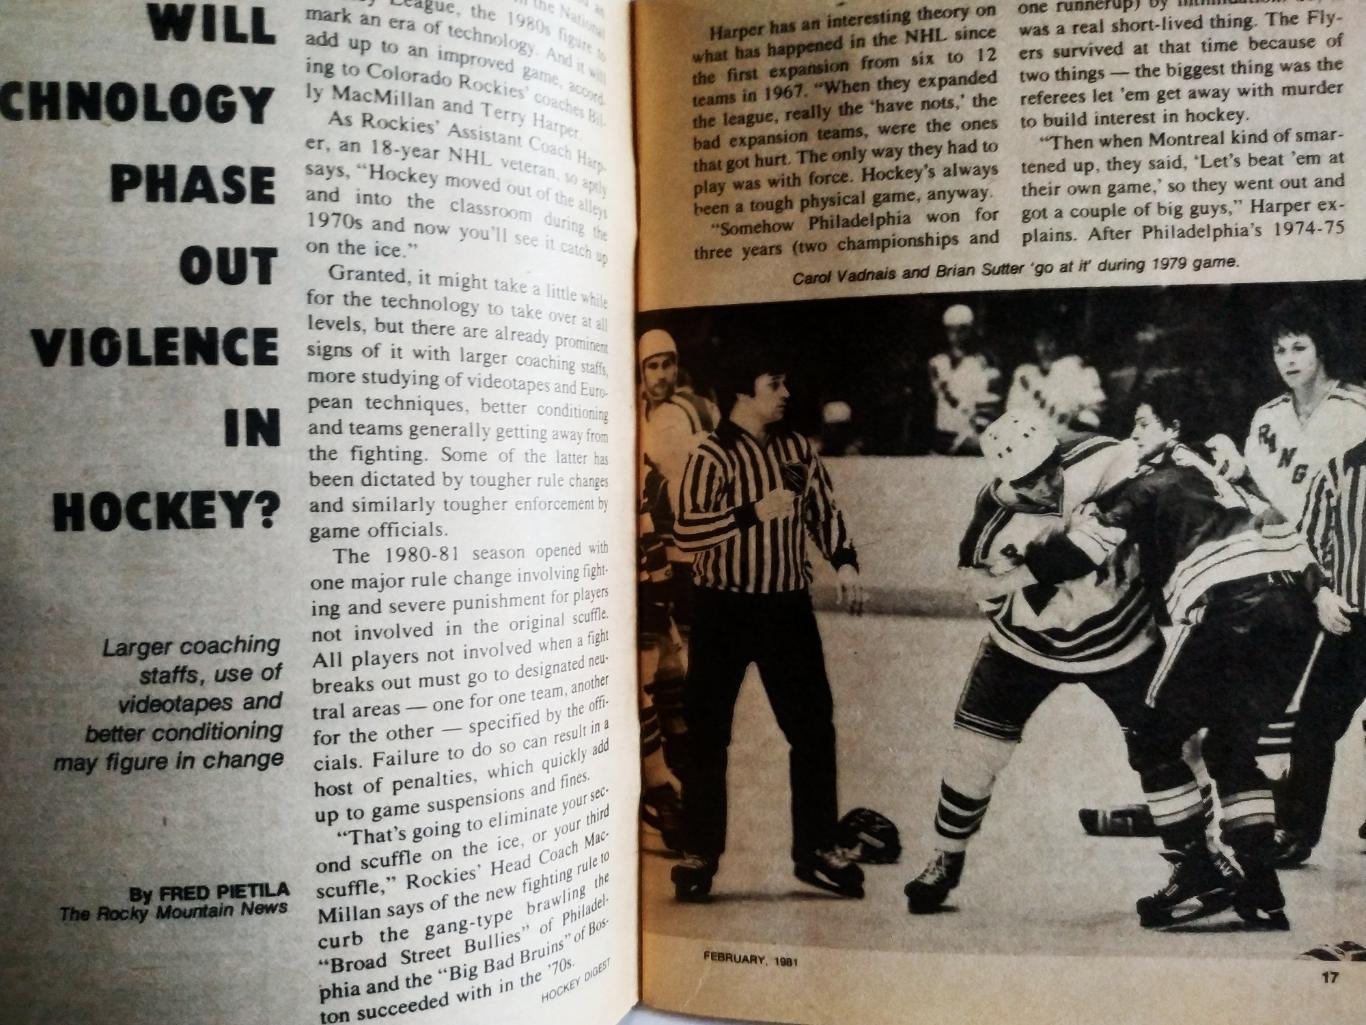 ХОККЕЙ ЖУРНАЛ ЕЖЕМЕСЯЧНИК НХЛ ХОККИ ДАЙДЖЕСТ NHL FEBRUARY 1981 THE HOCKEY DIGEST 2